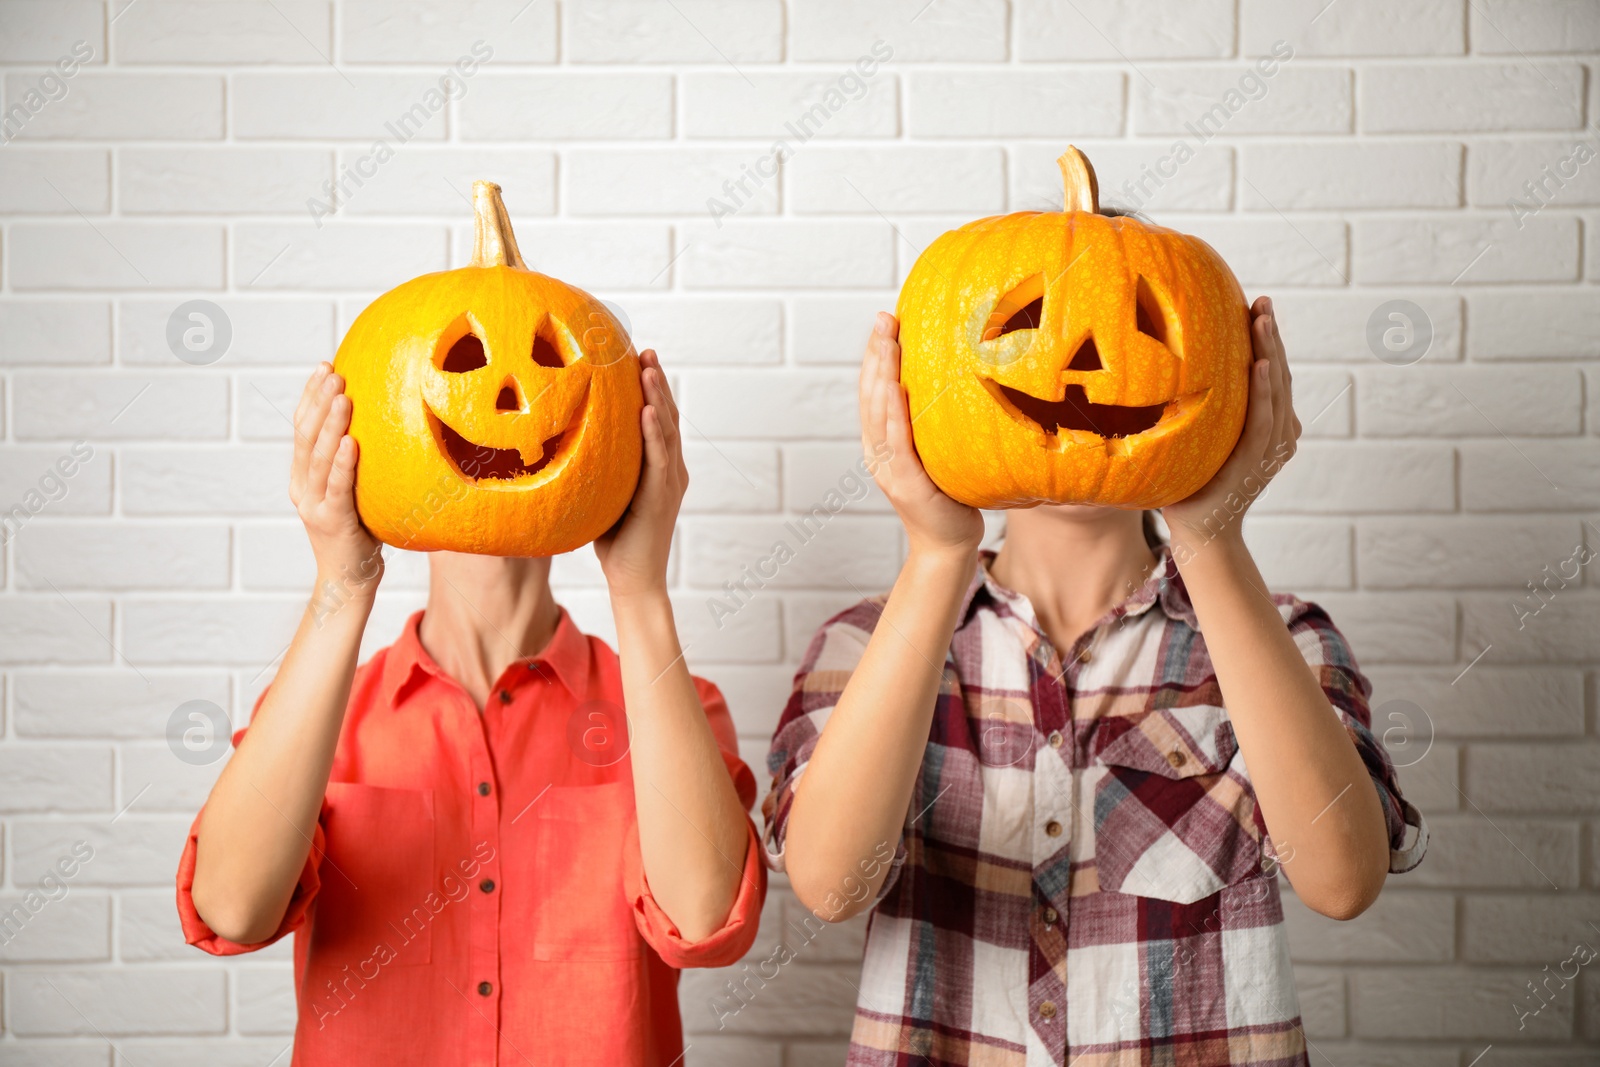 Photo of Women with pumpkin heads near white brick wall. Jack lantern - traditional Halloween decor